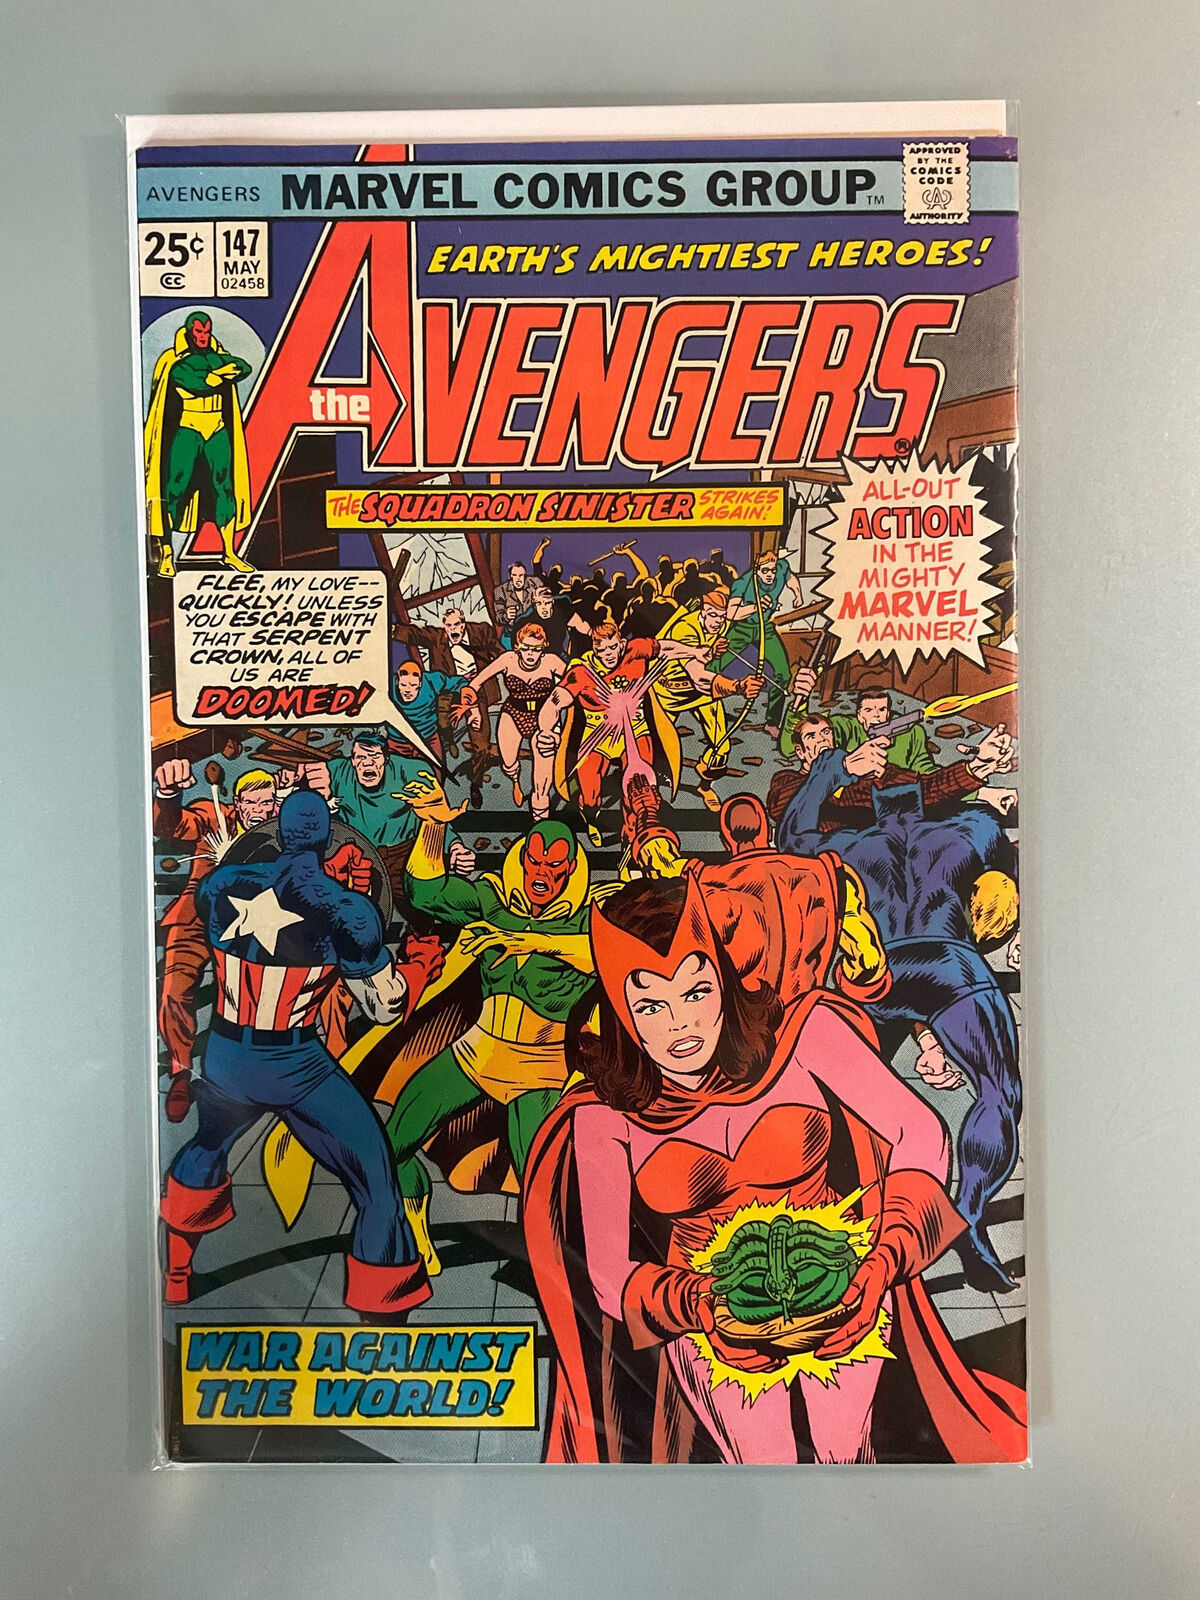 The Avengers(vol. 1) #147 - Marvel Comics - Combine Shipping - $10.68